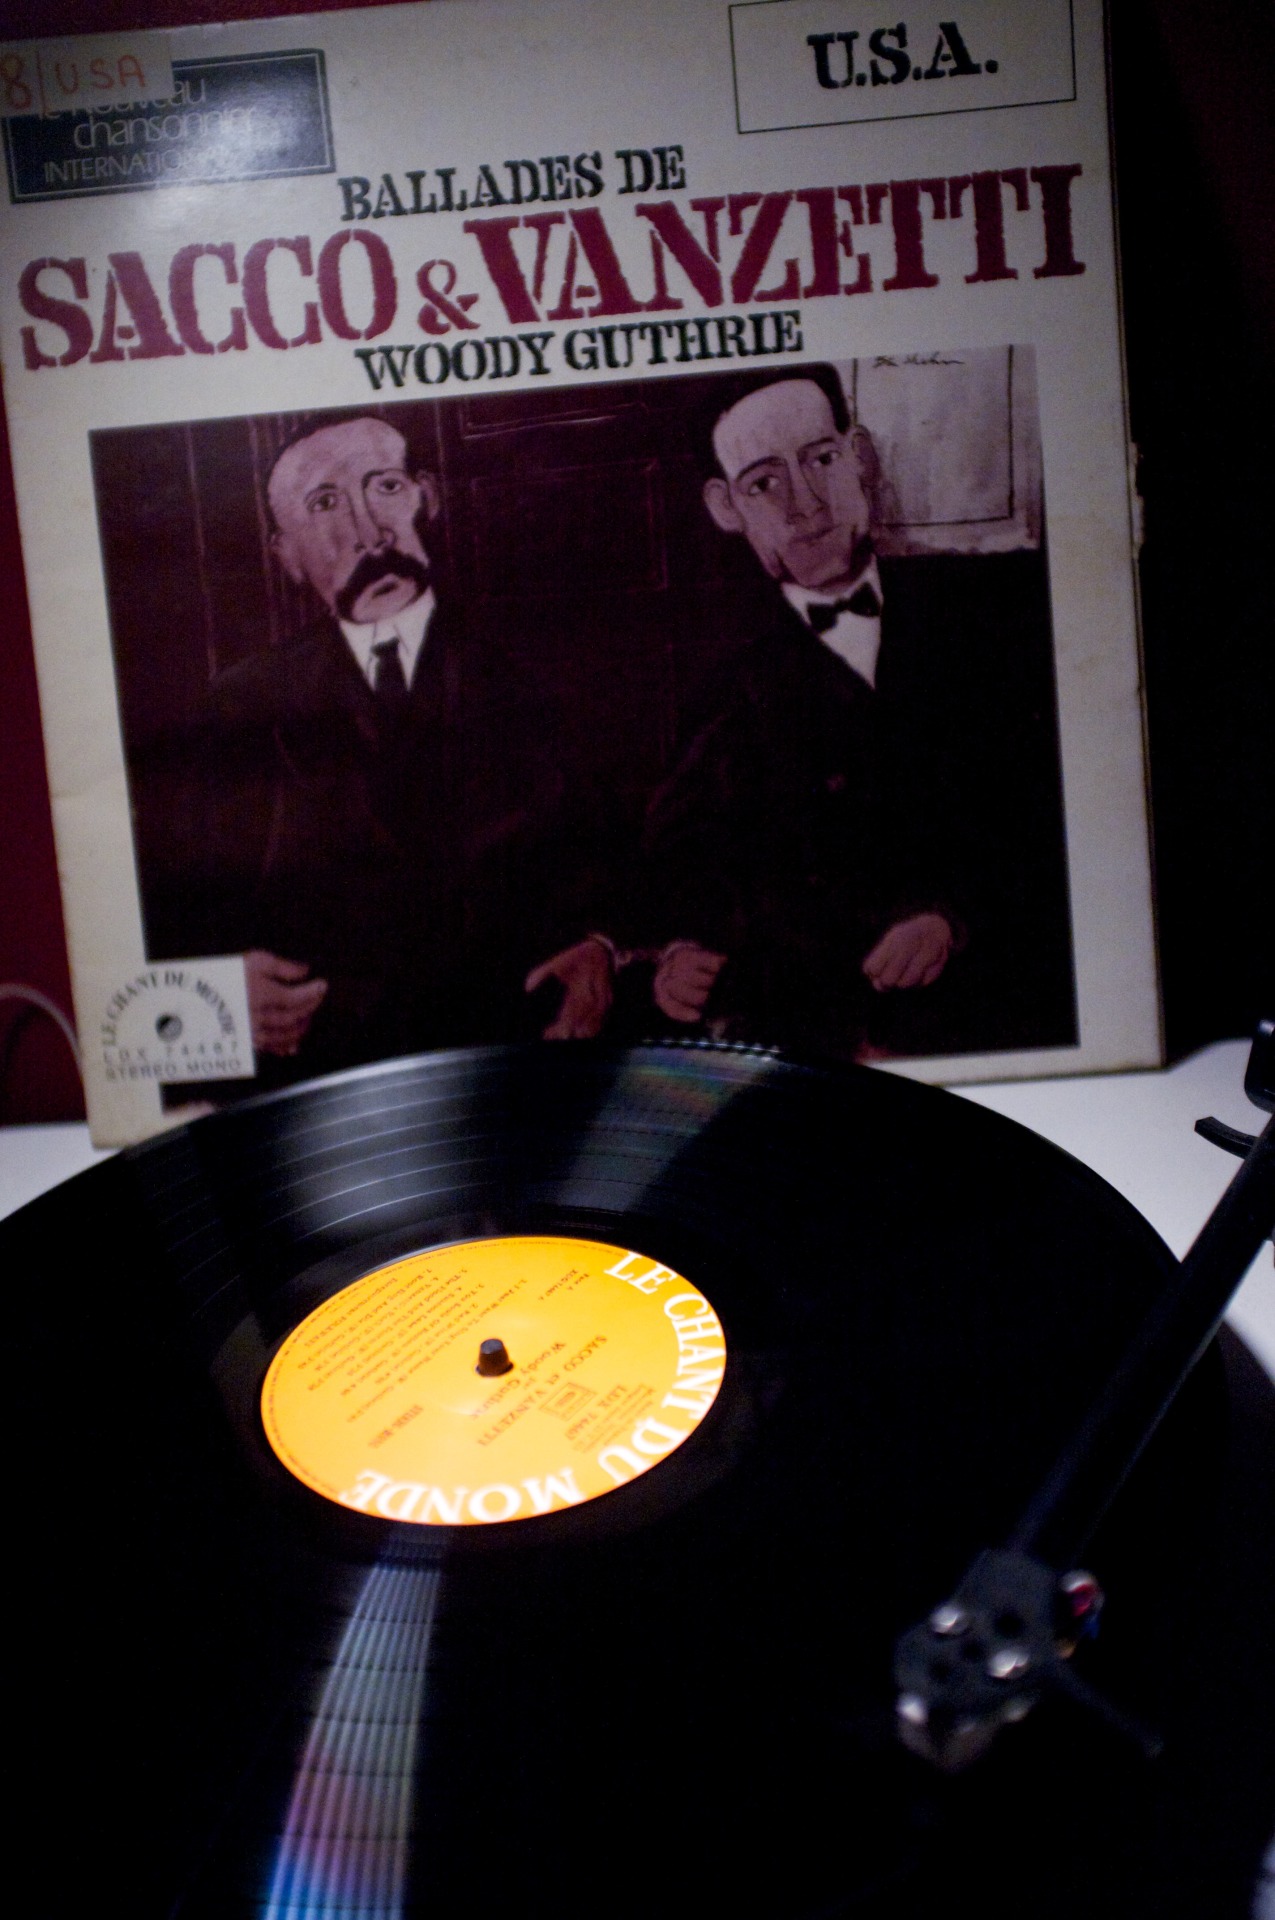 Woody Guthrie - “Ballades de Sacco & Vanzetti” - 1960 - Label “Le Chant du Monde”